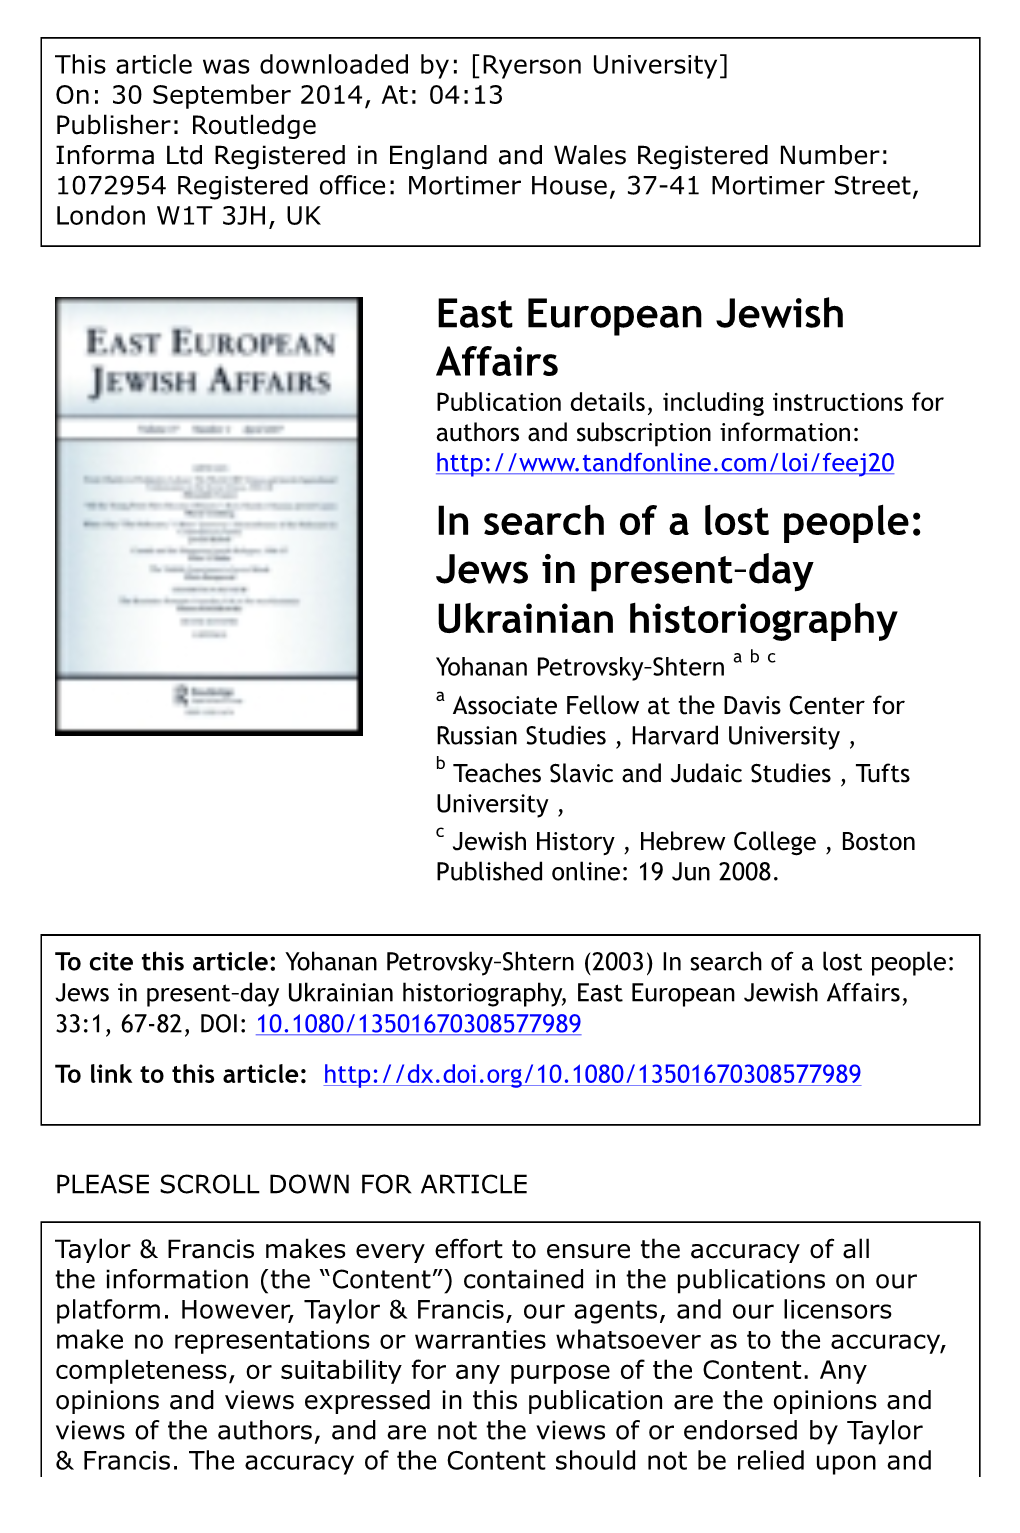 Jews in Present‐Day Ukrainian Historiography